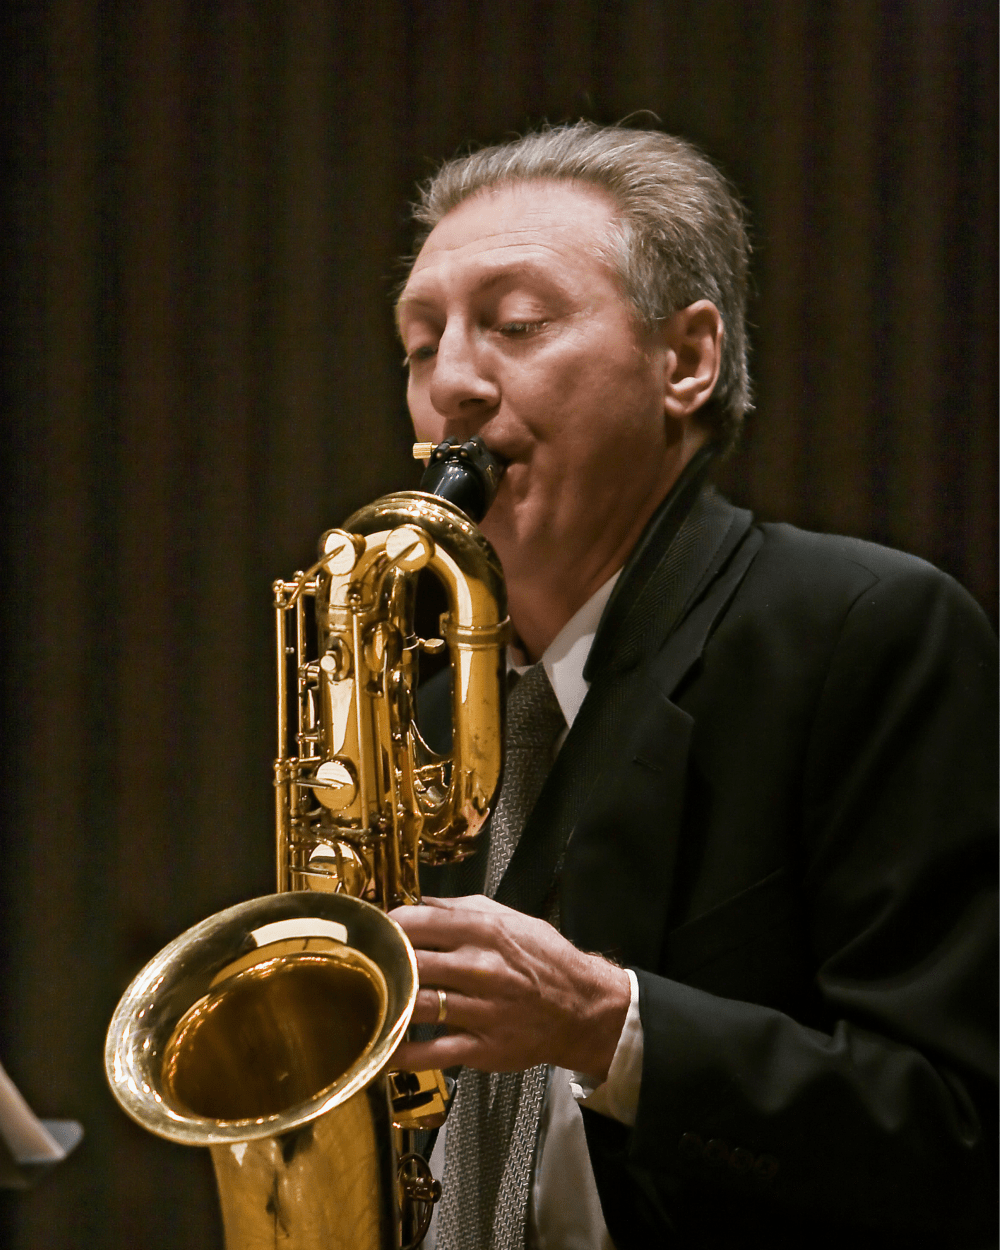 Richard J Chandler Performs on Baritone Saxophone at St. Cloud,State University Recital in Saint Cloud, MN